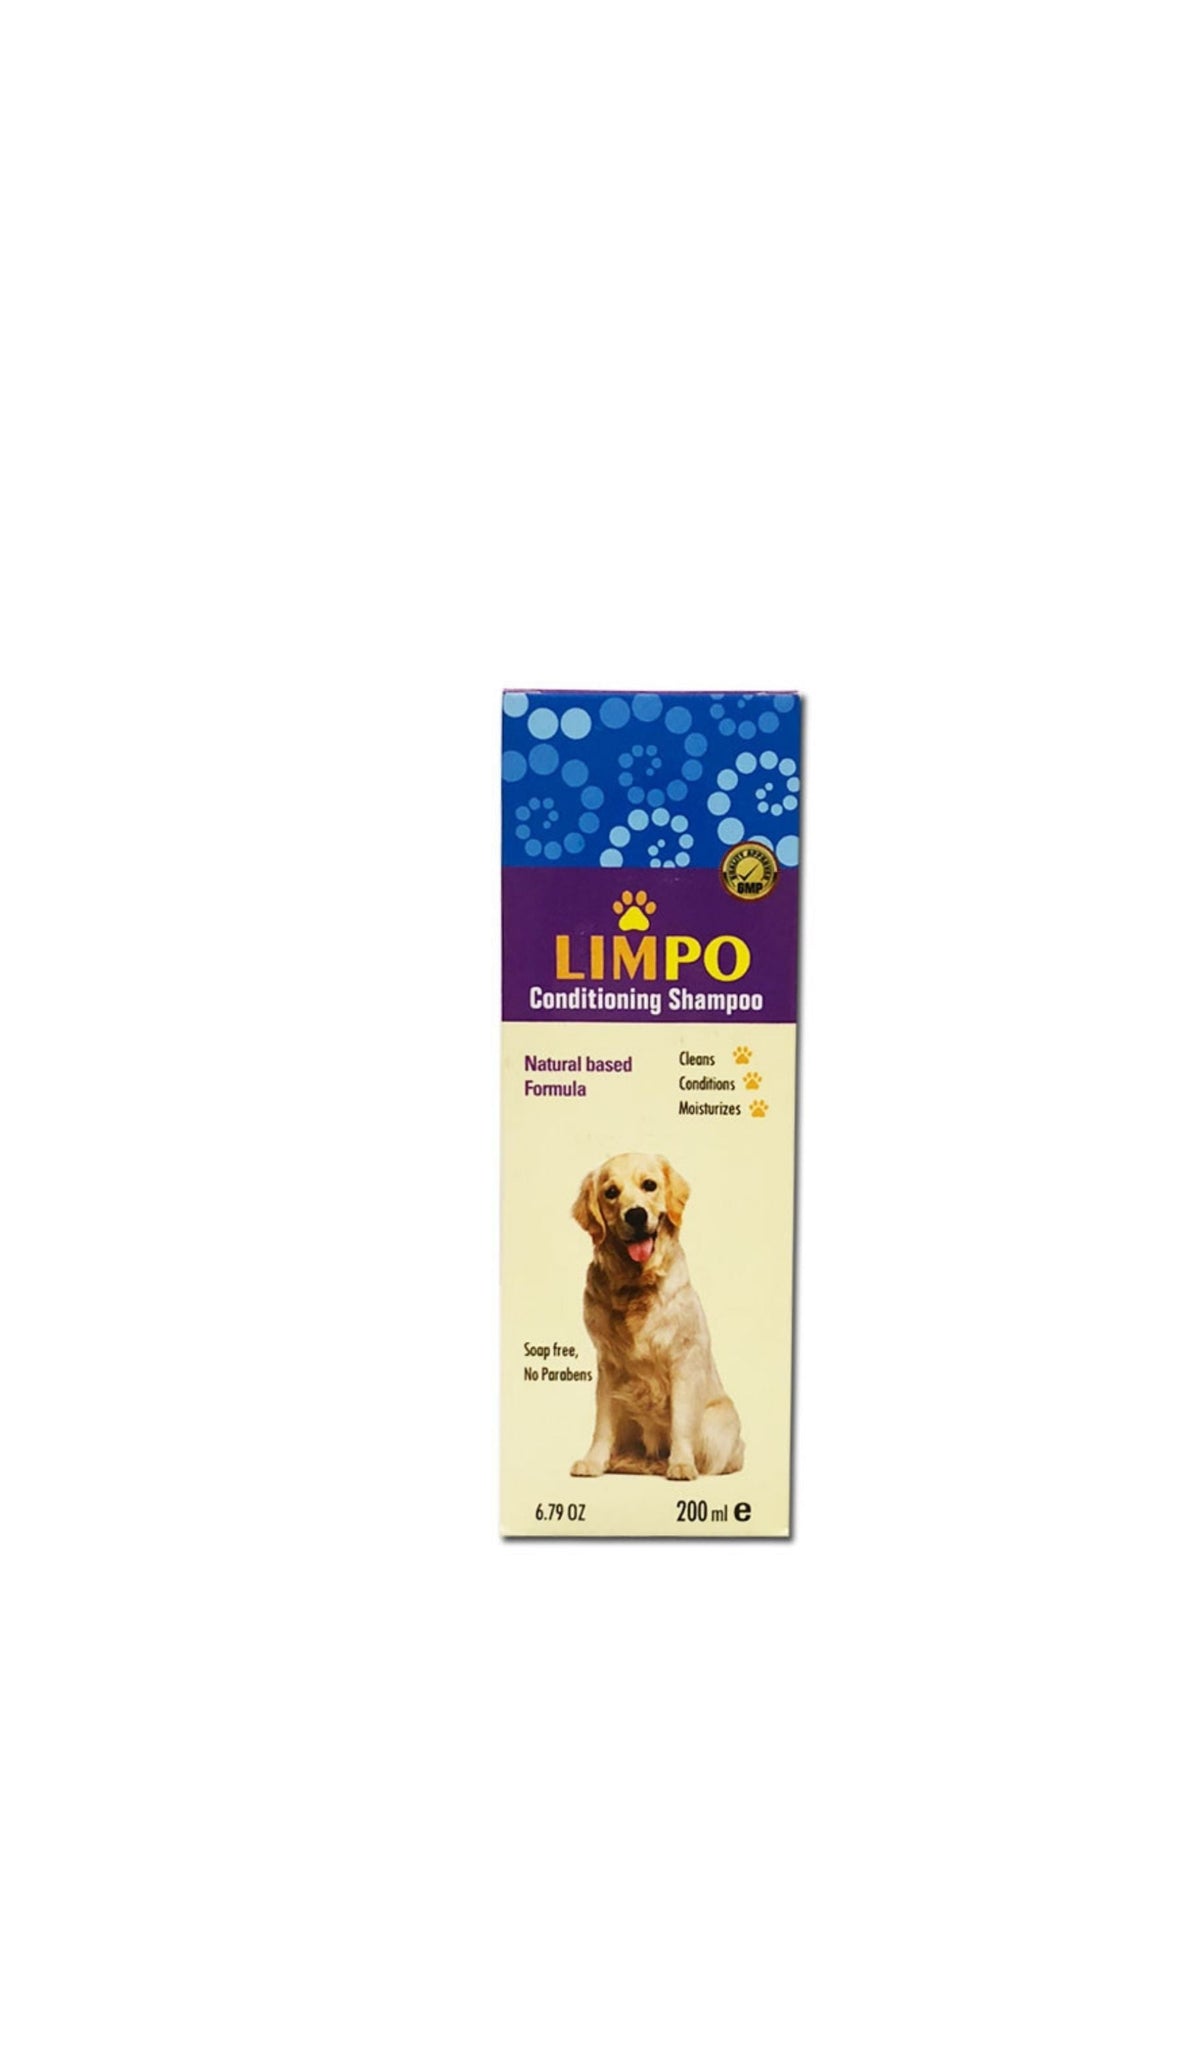 Limpo Conditioning Shampoo 200ml petbay.lk